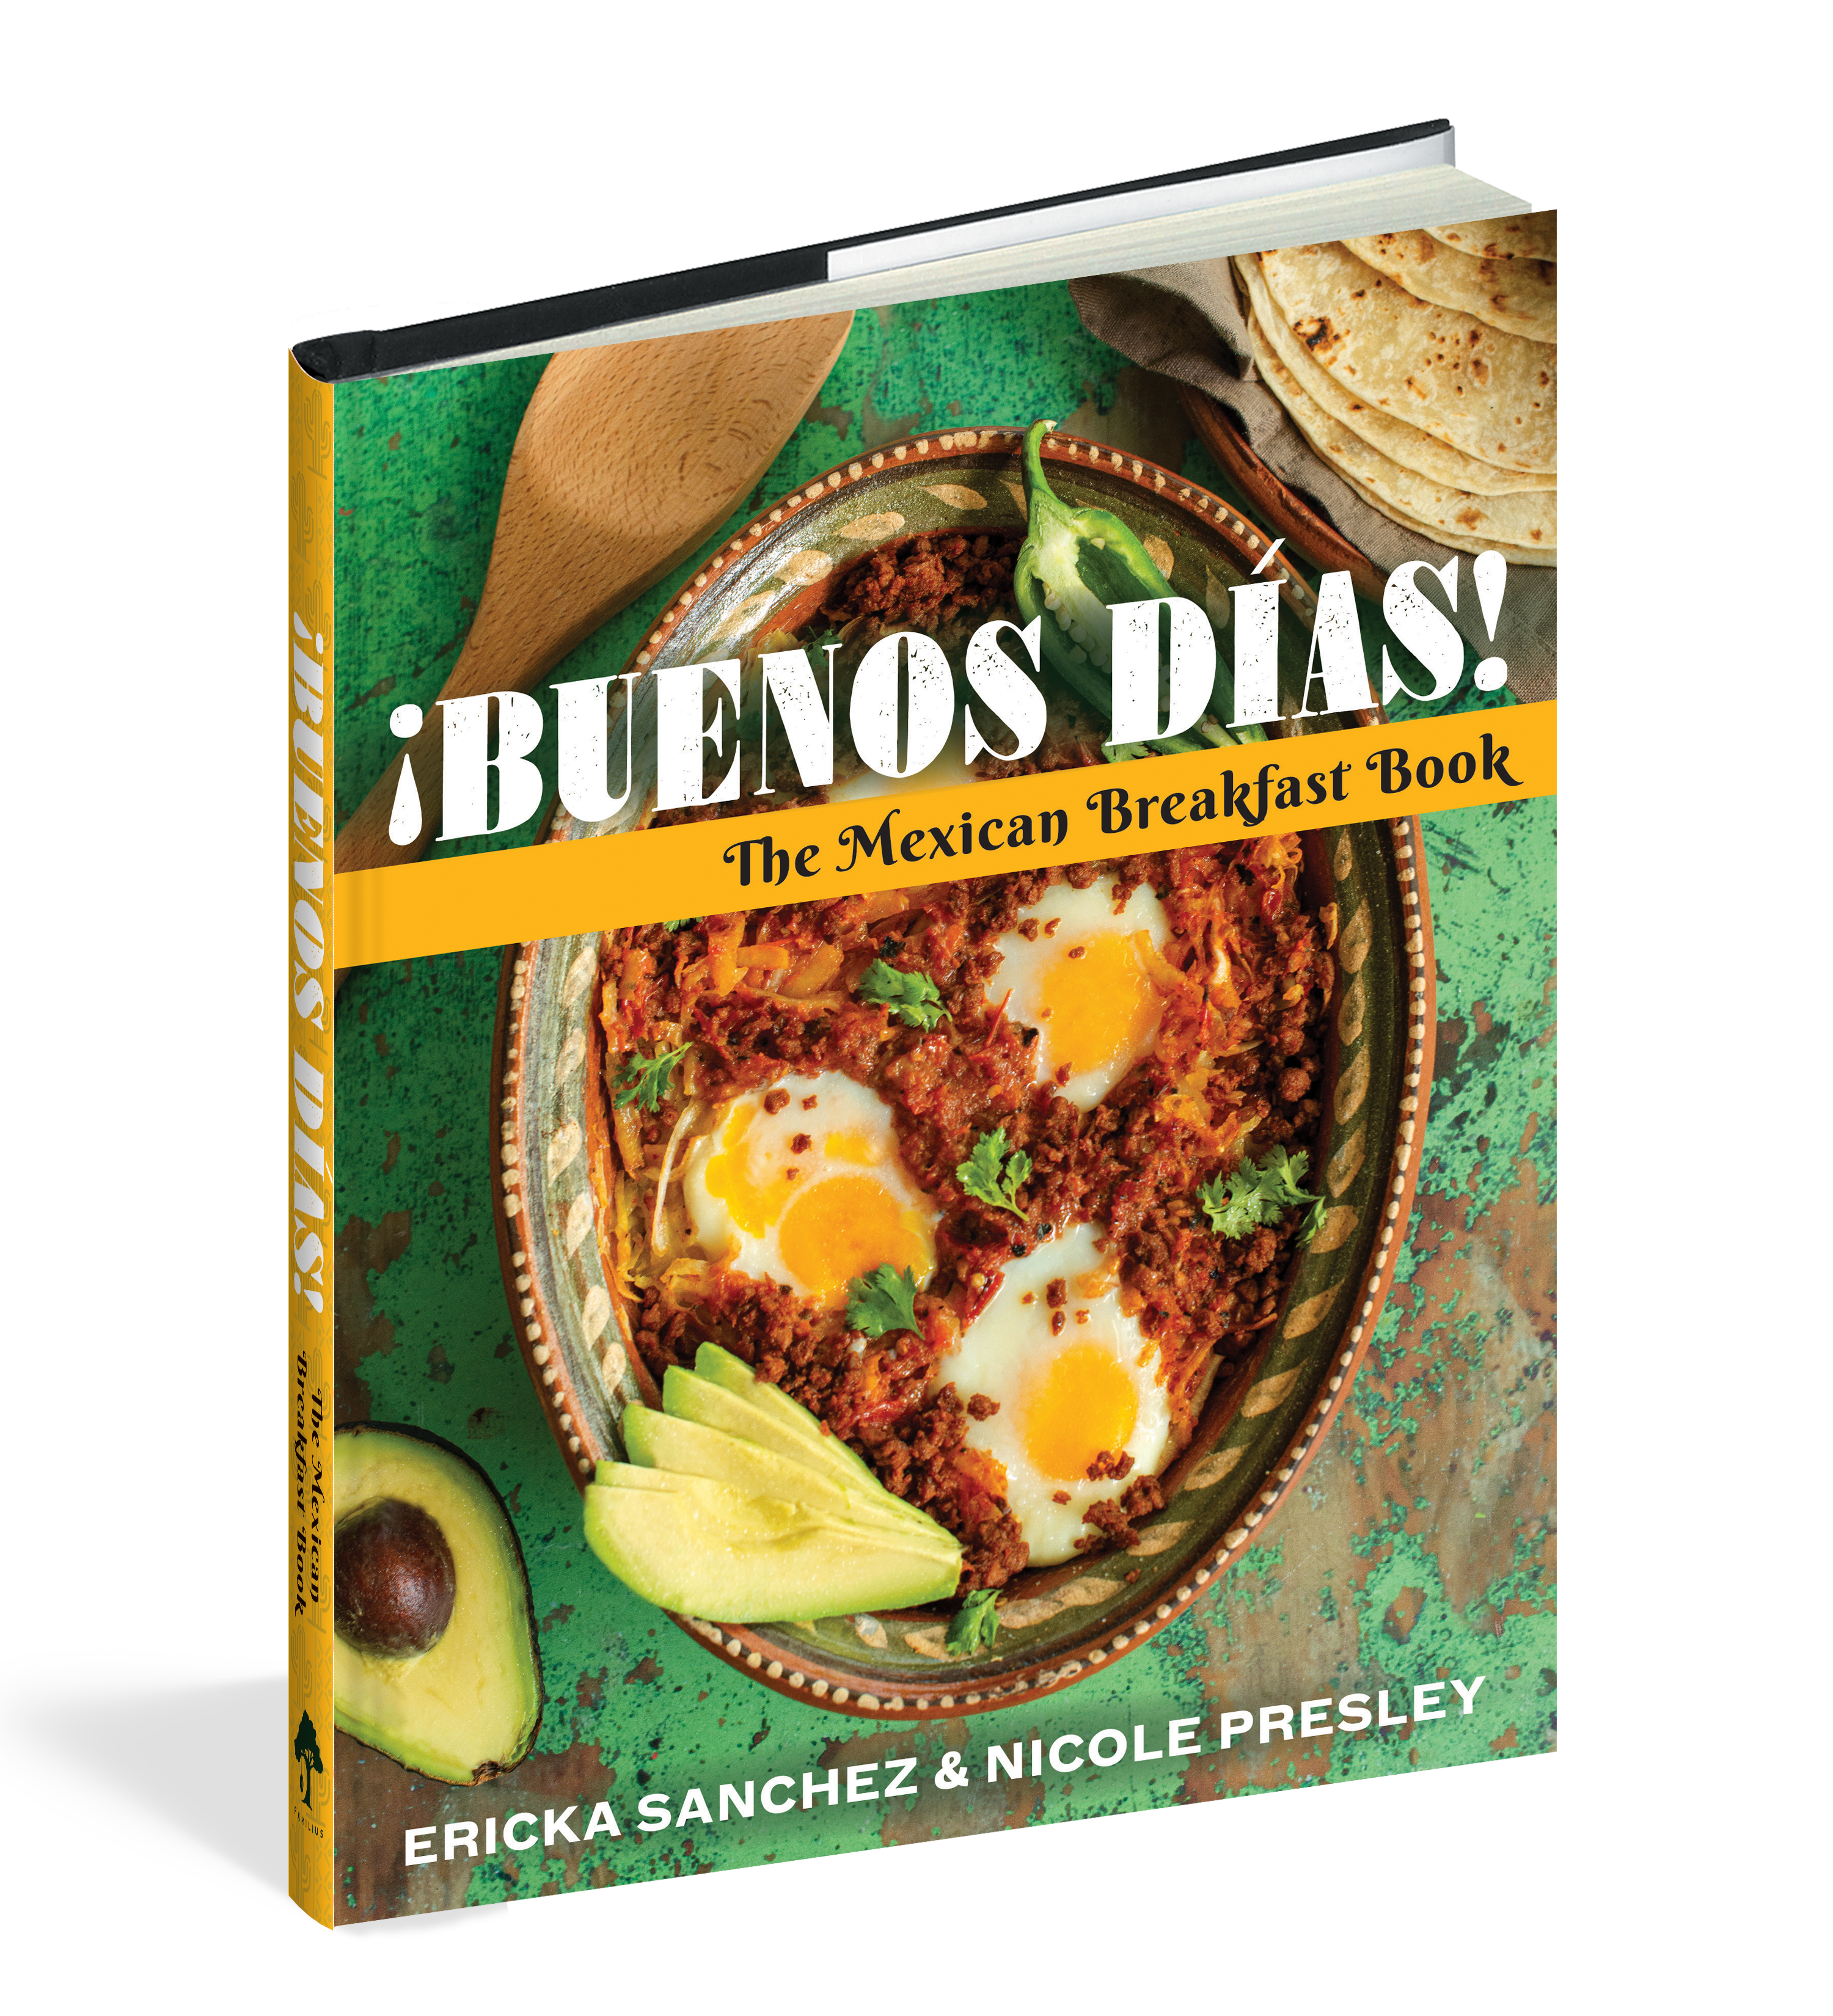 The cover of the cookbook ­¡Buenos Días!